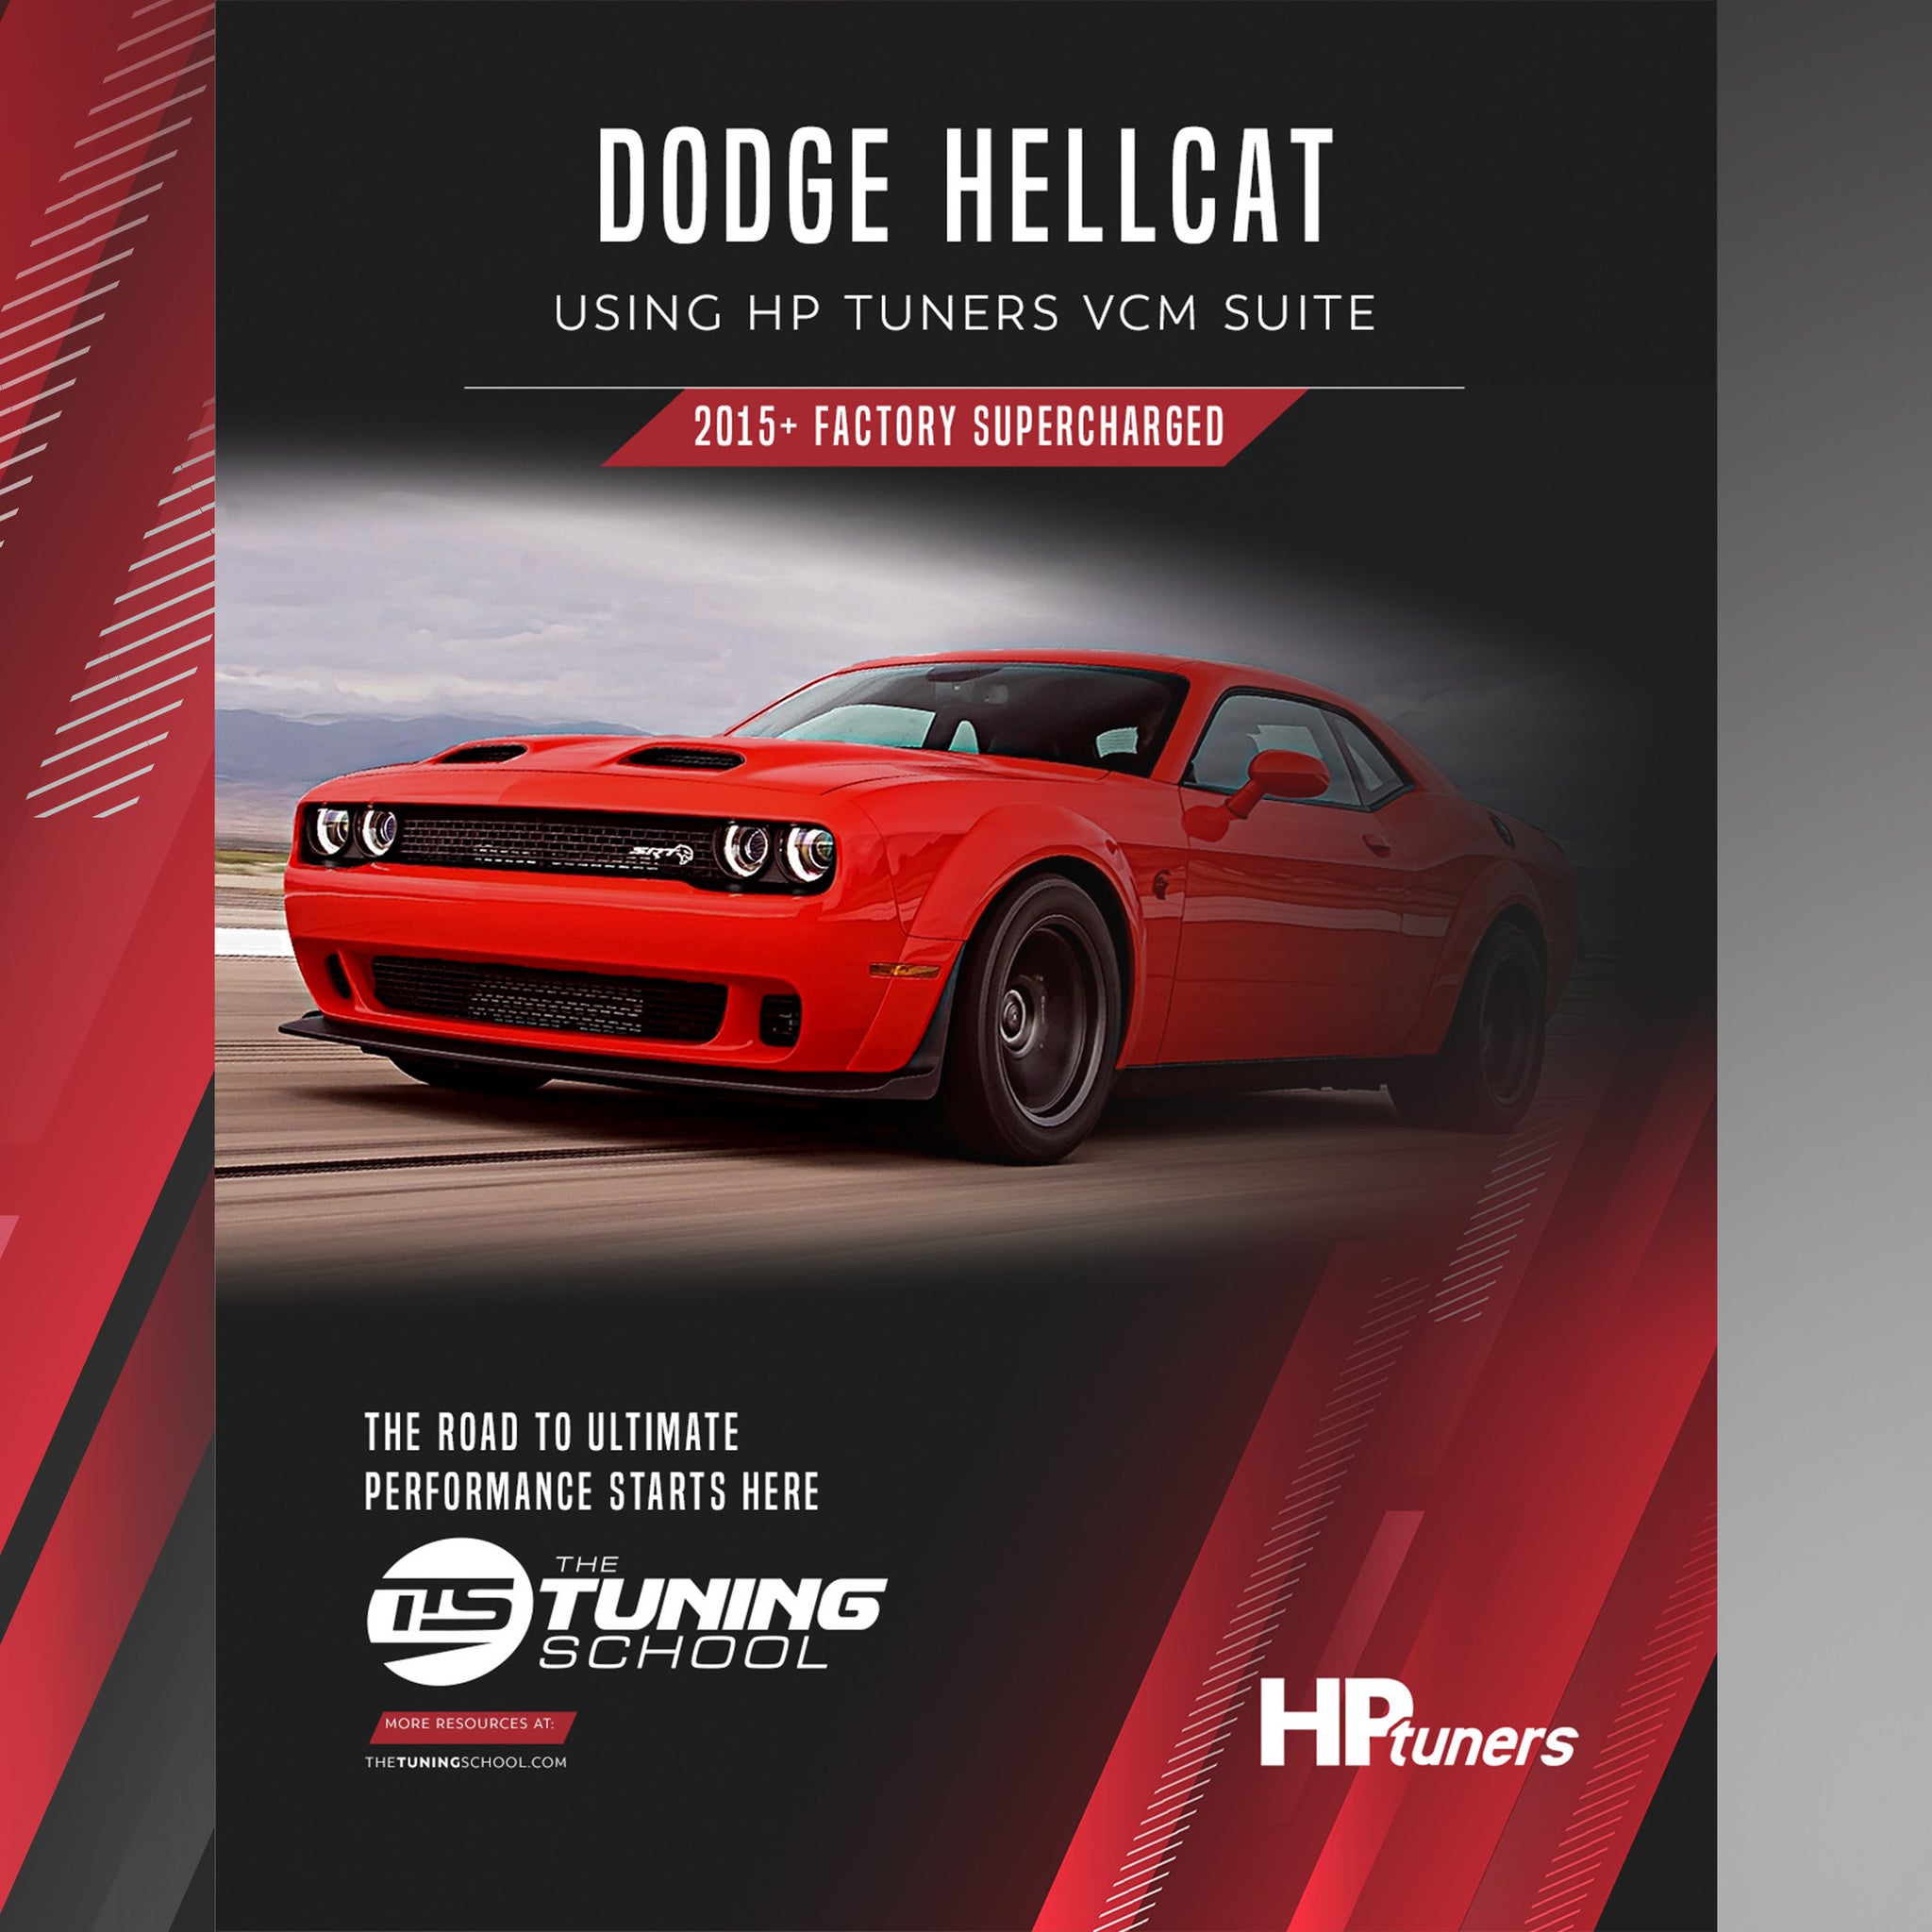 Dodge Hellcat Engine Tuning using HP Tuners